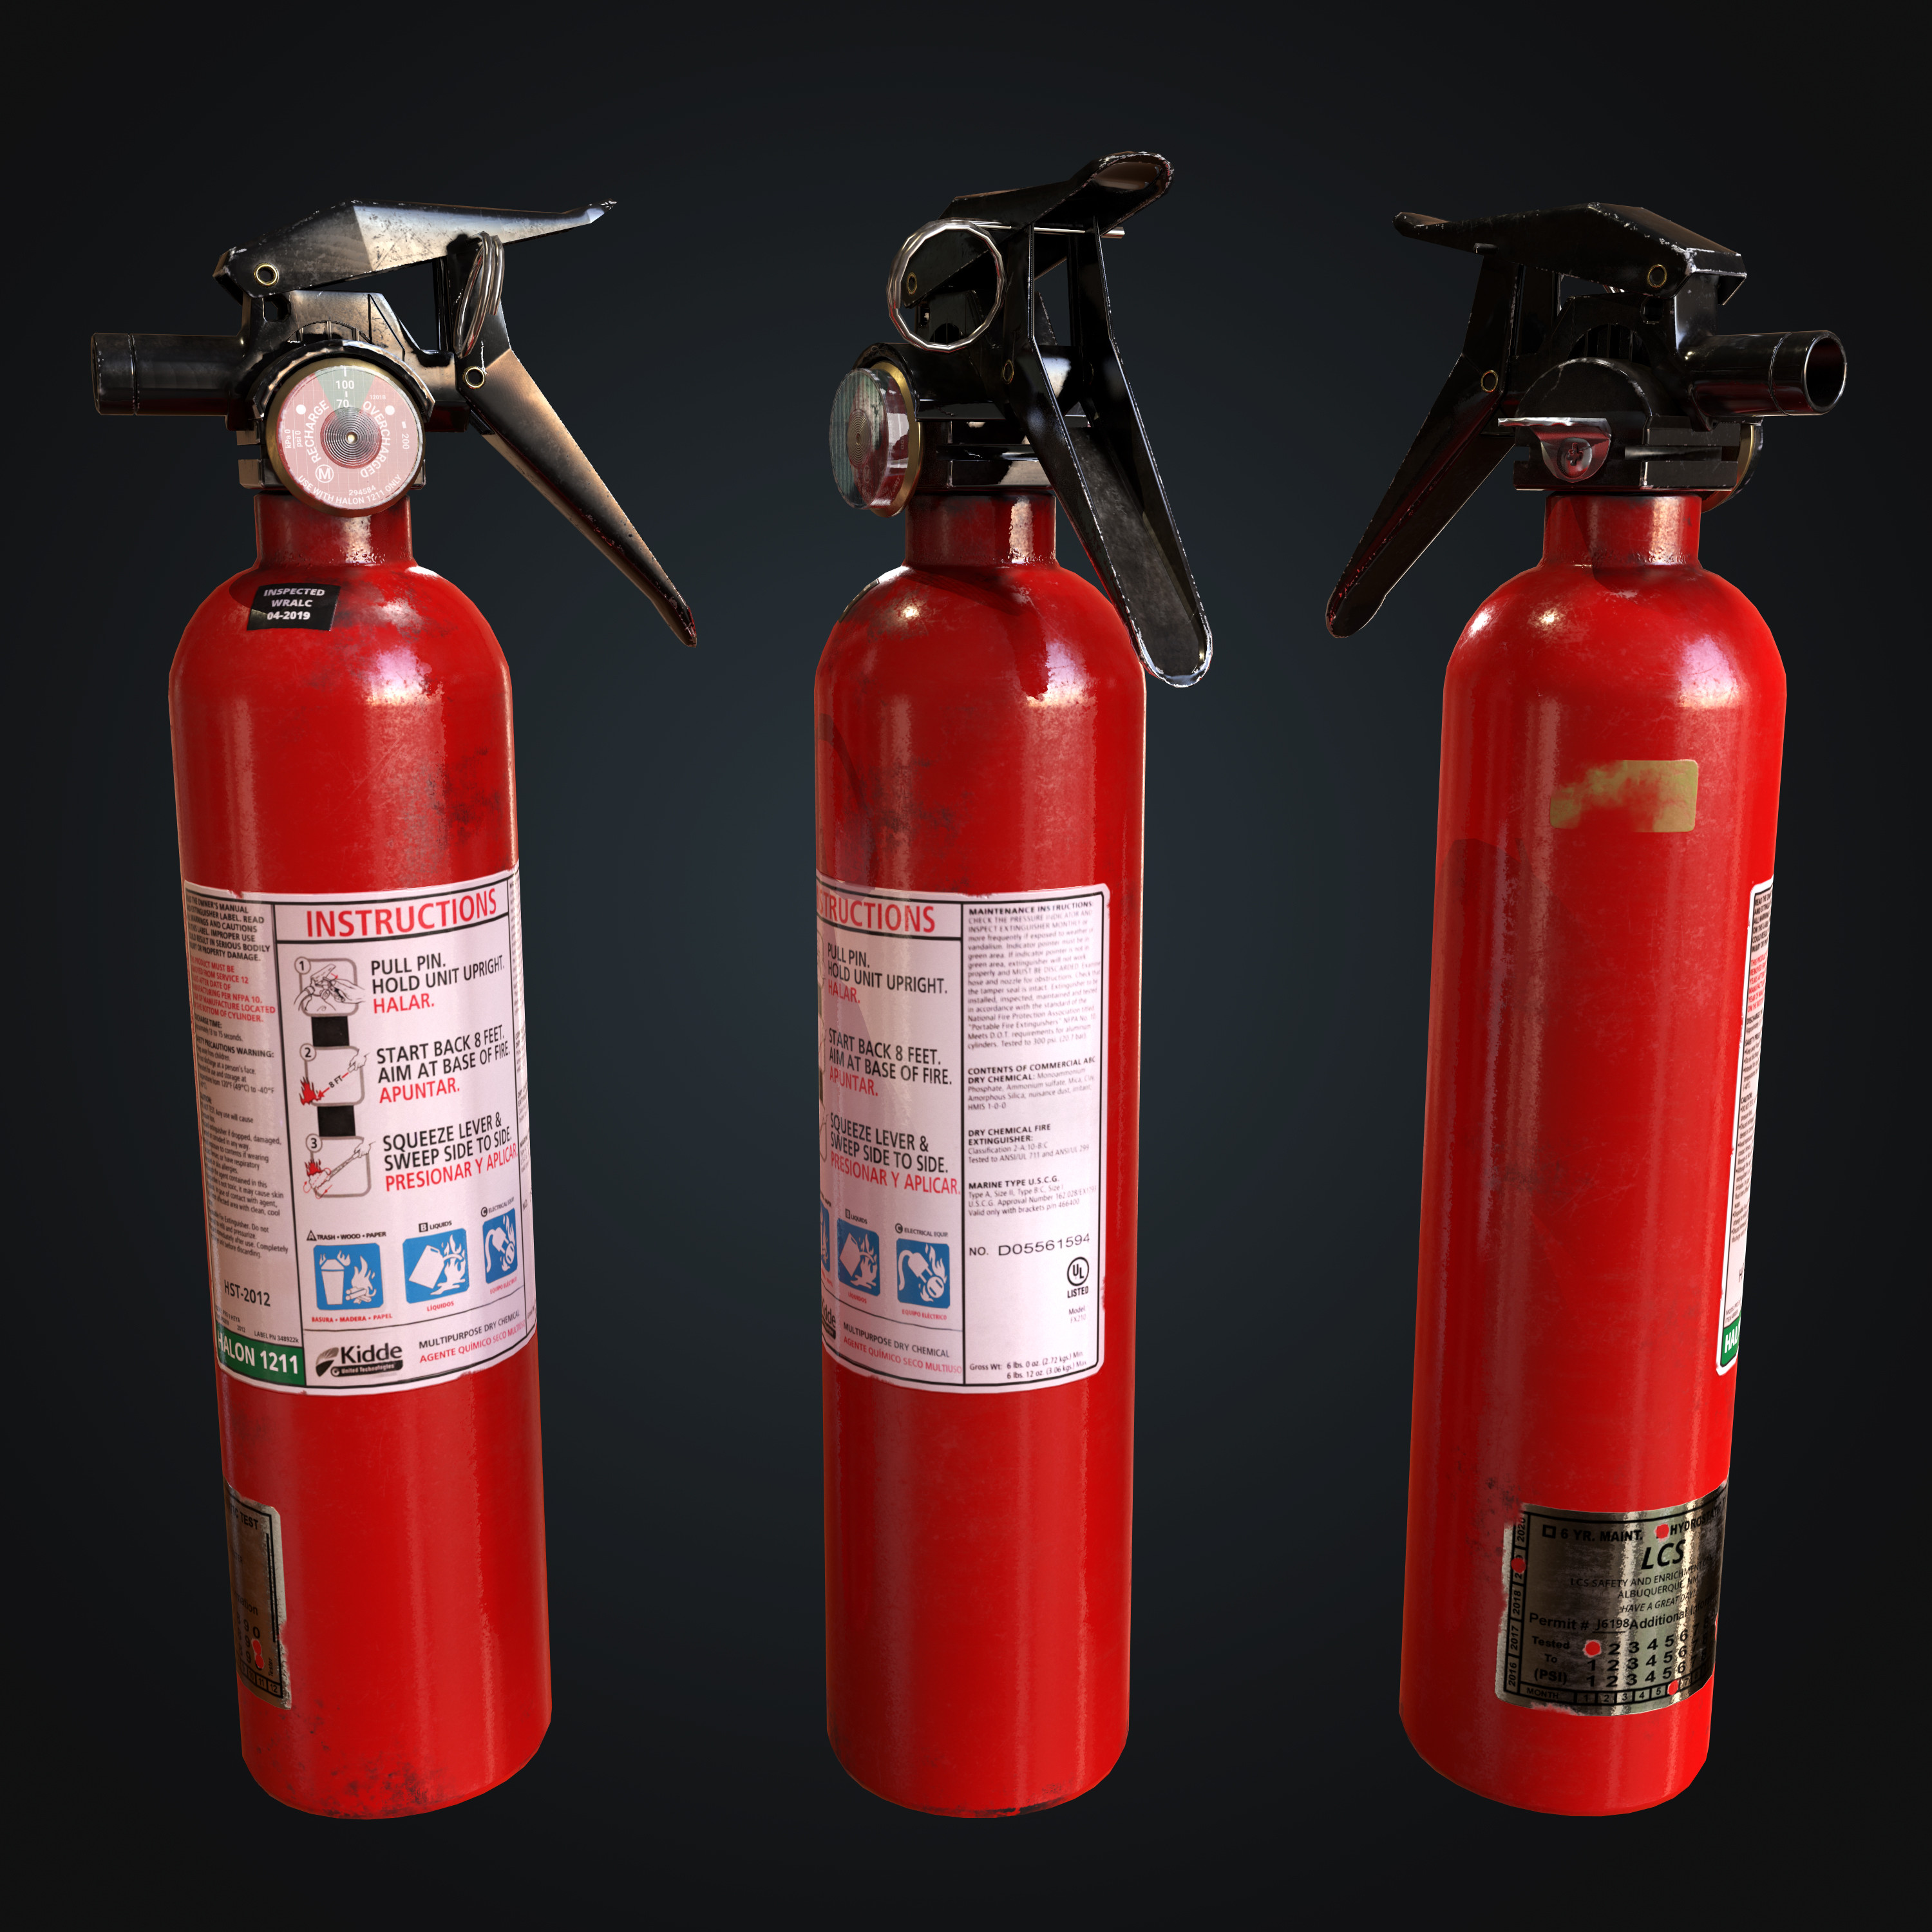 Ali Ghadimi - Handheld Fire Extinguisher